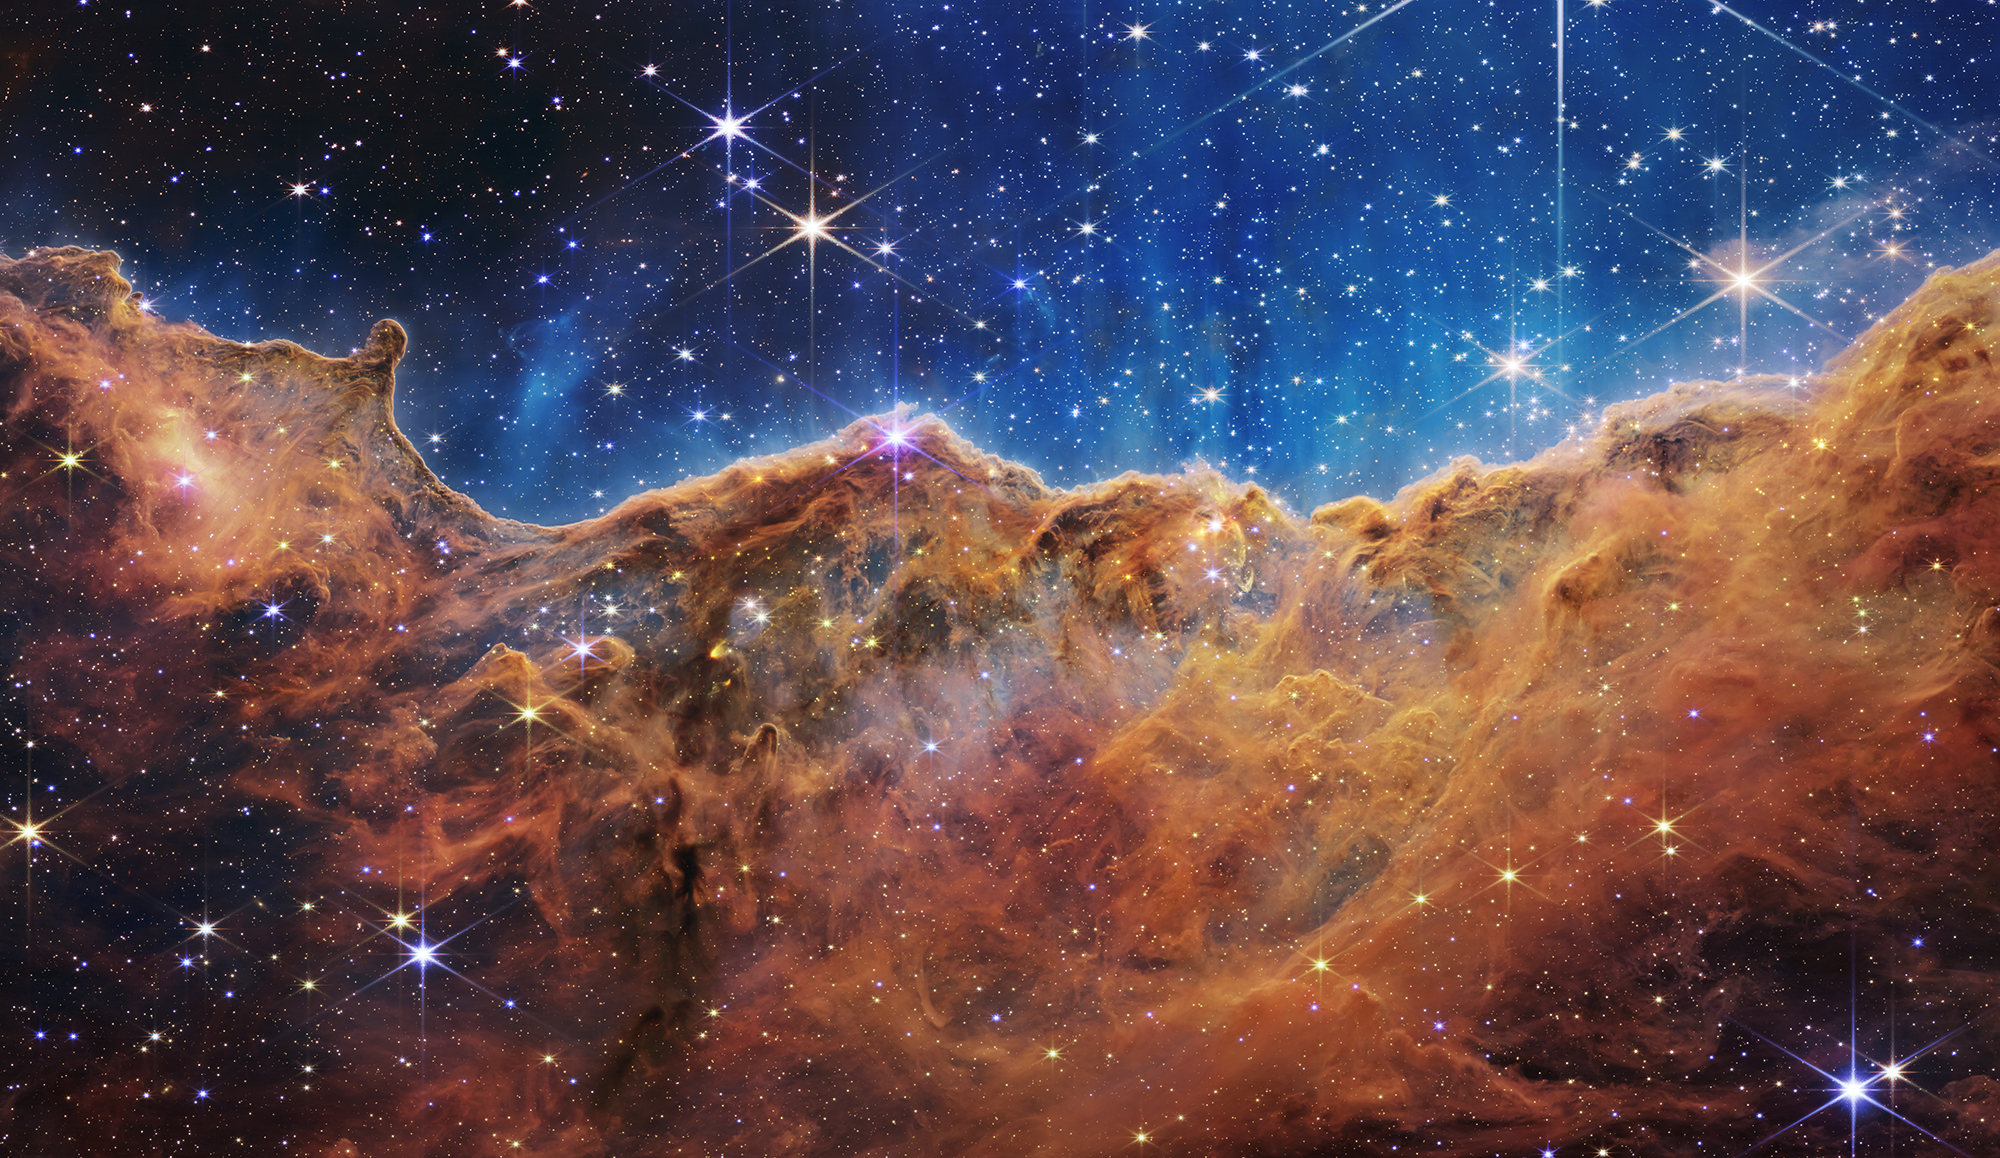 Carina Nebula 
James Webb Space Telescope, NASA